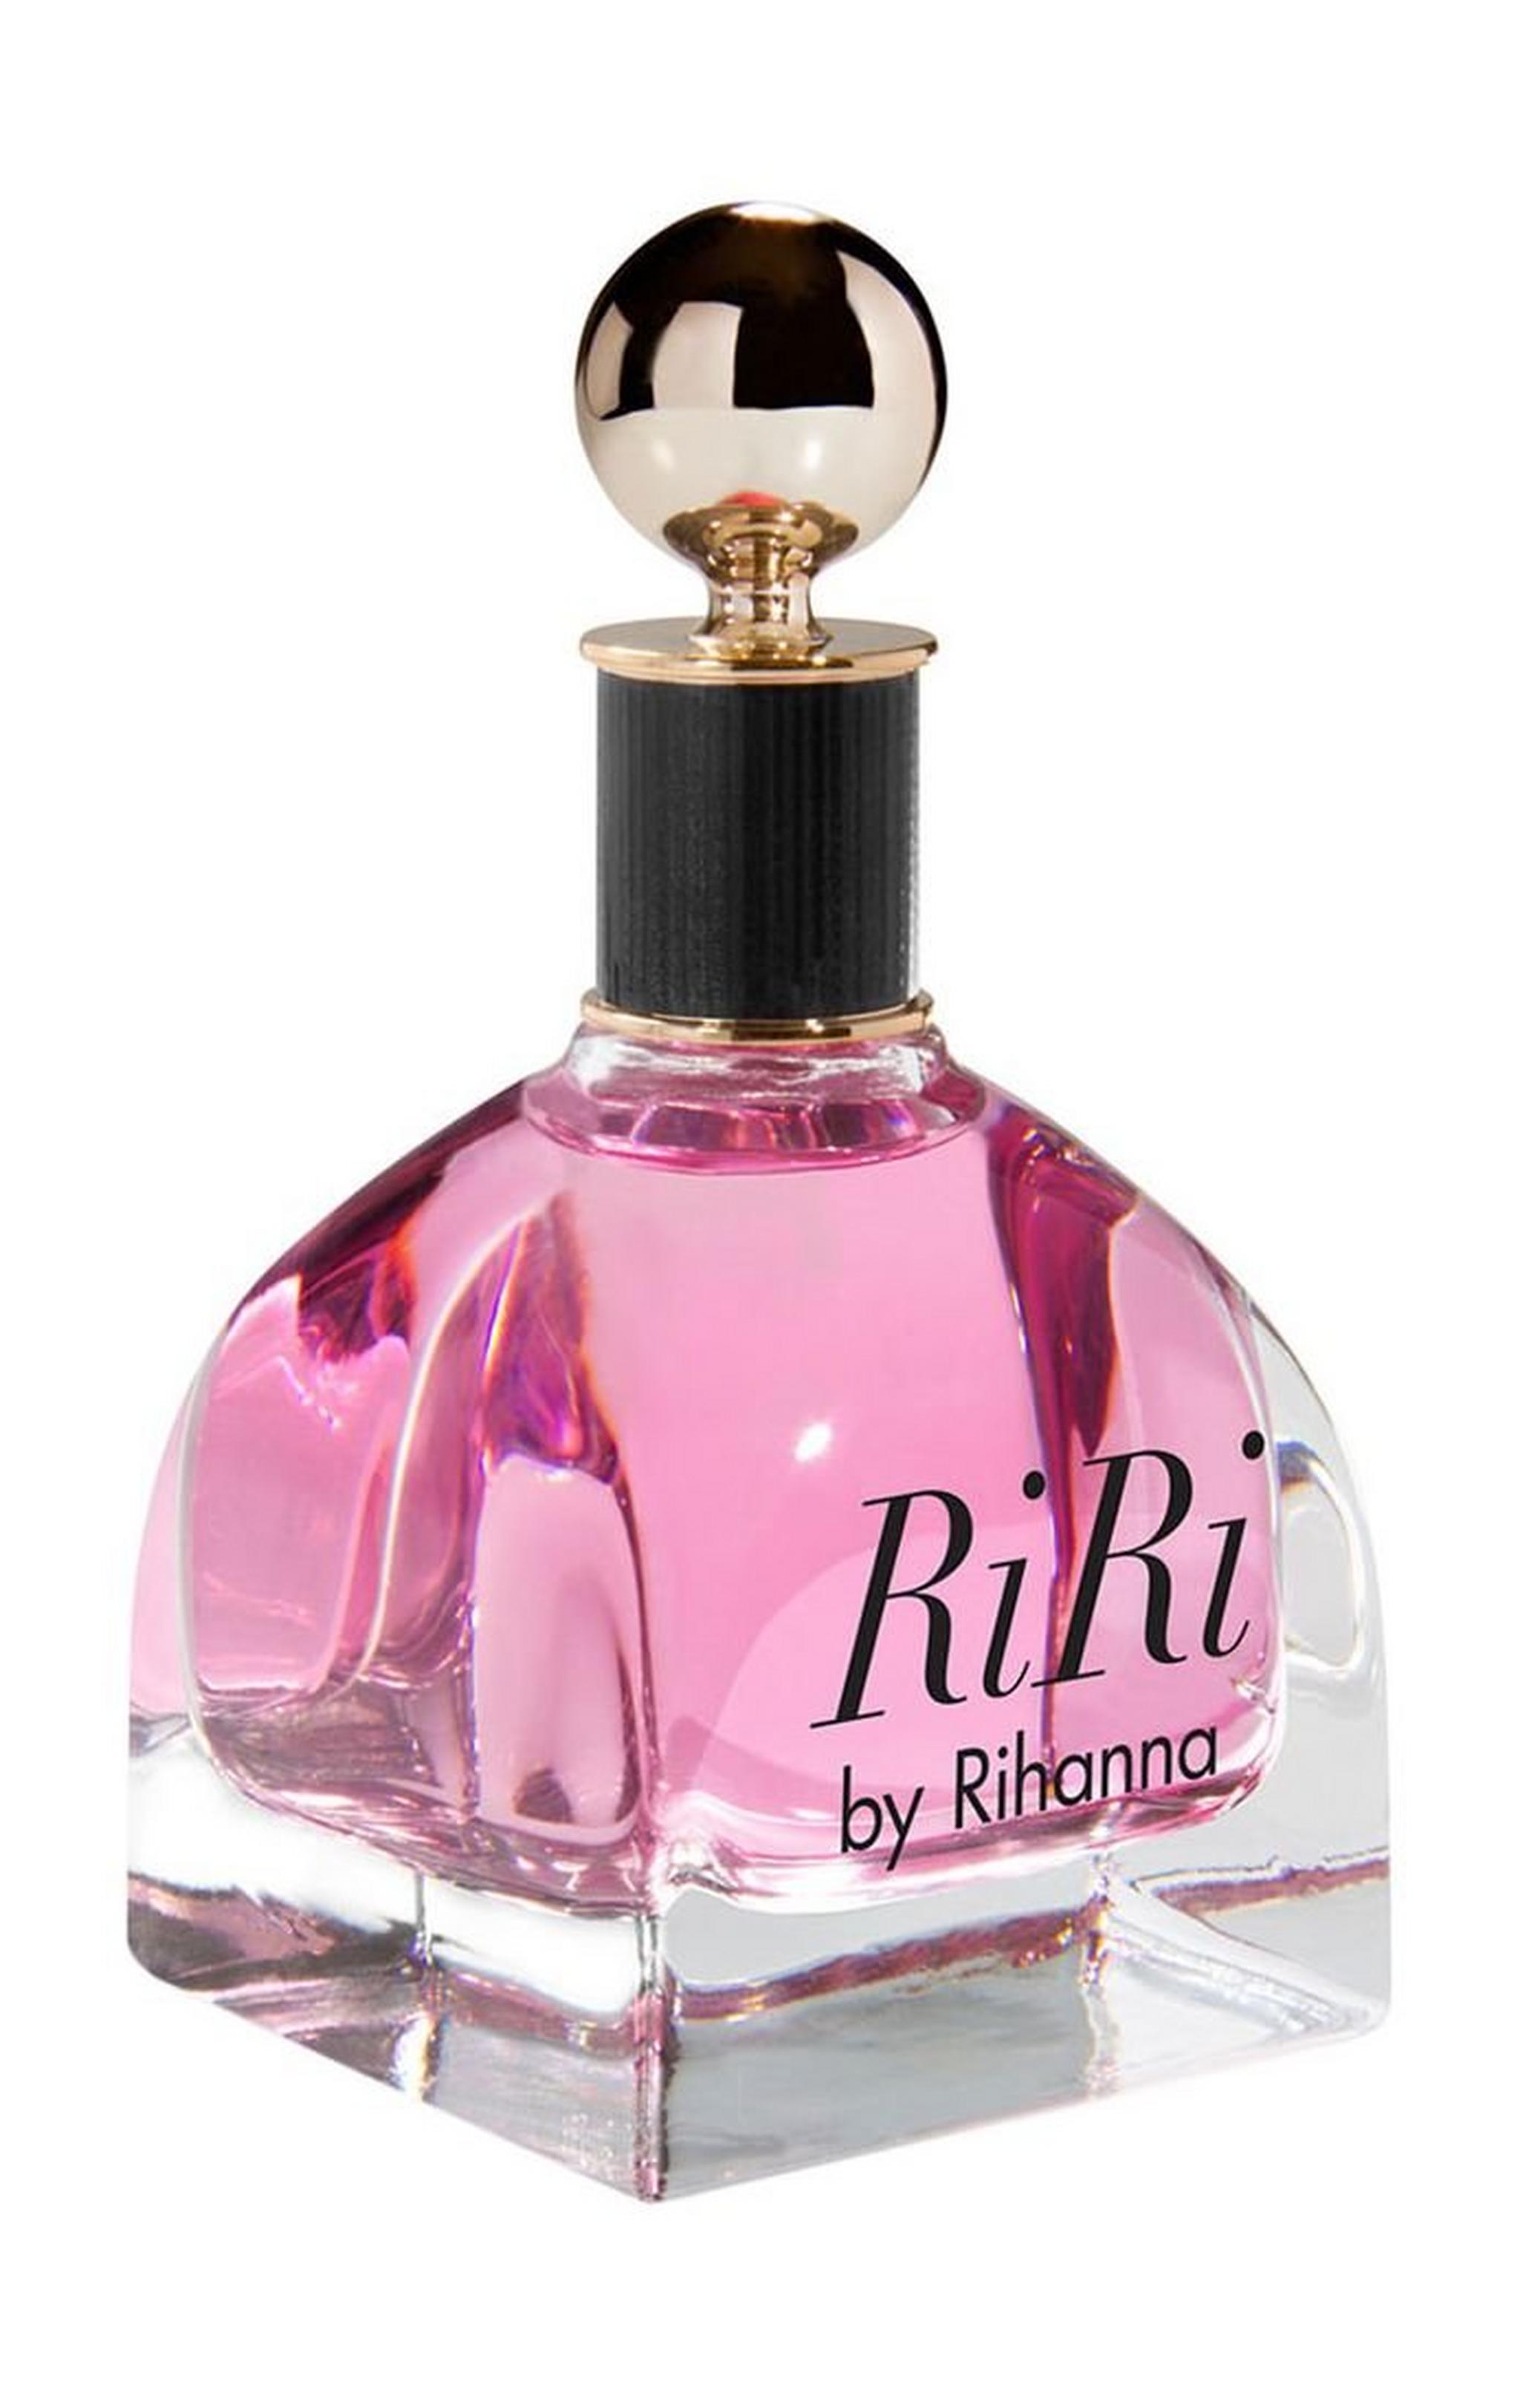 Riri by Rihanna 50ml For Women Eau de Parfum